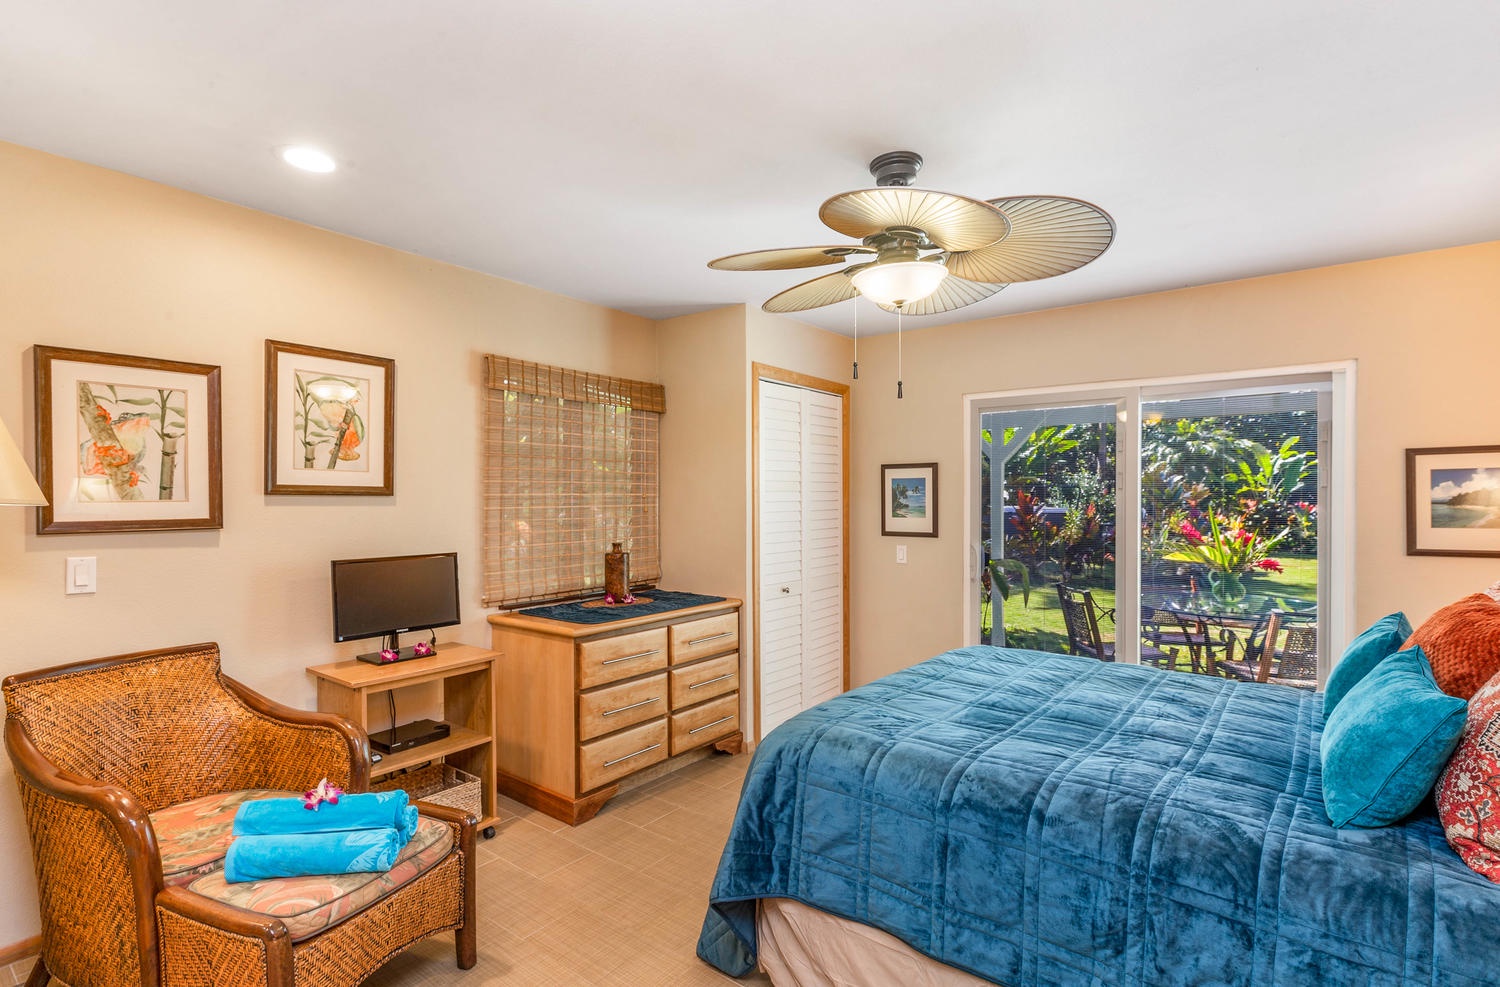 Princeville Vacation Rentals, Hale Anu Keanu - Downstairs primary bedroom